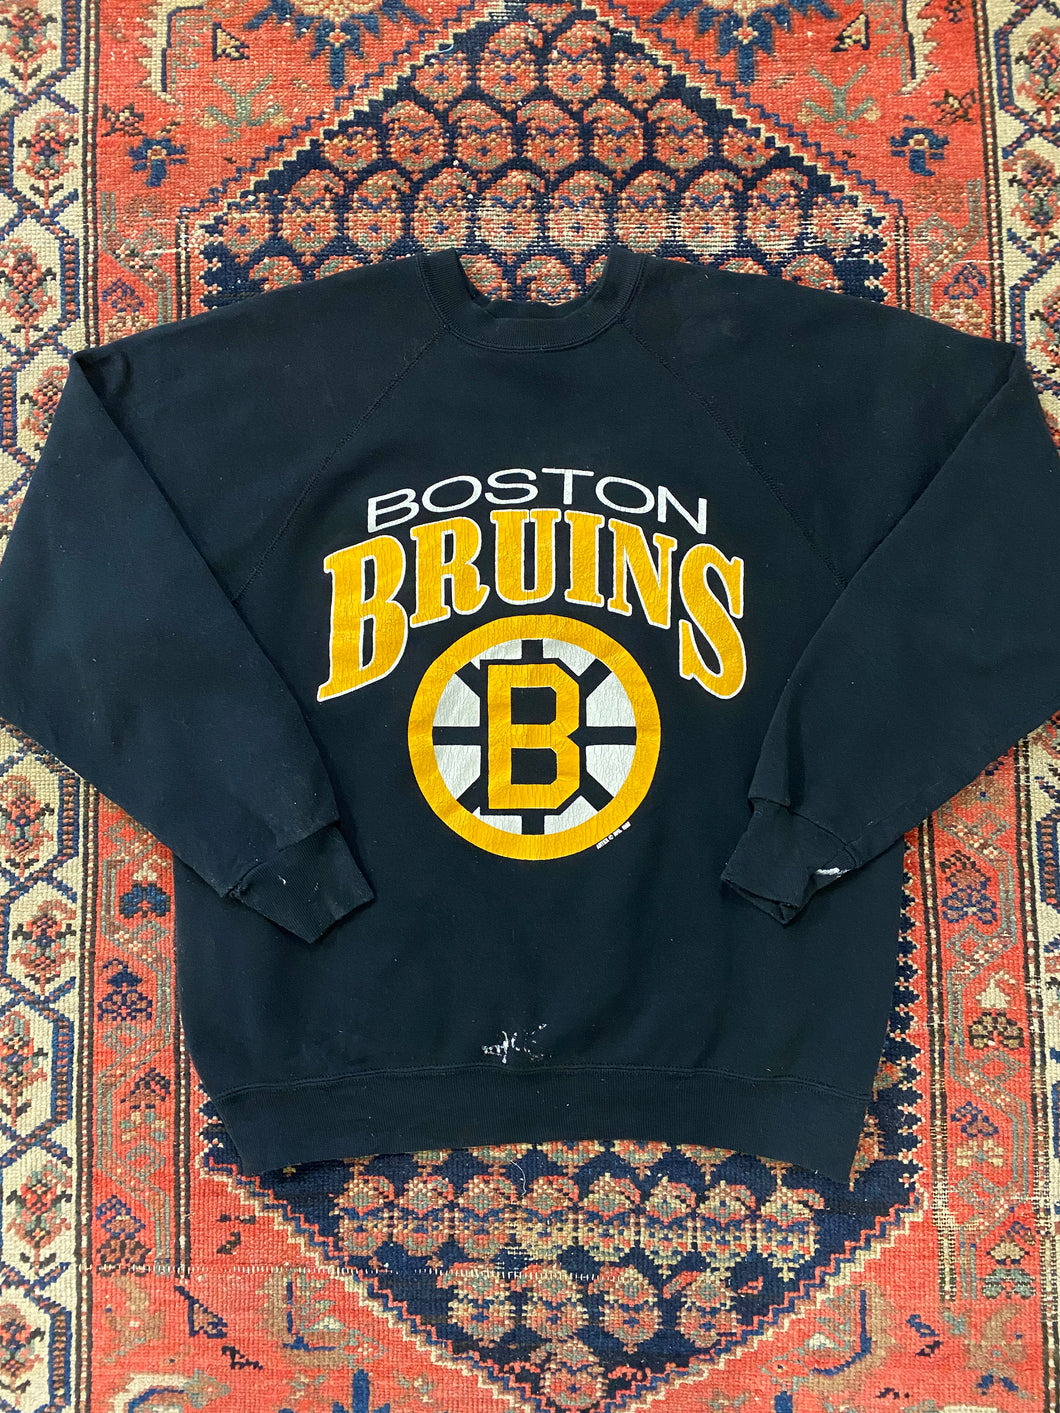 1980s Boston Bruins Crewneck - M